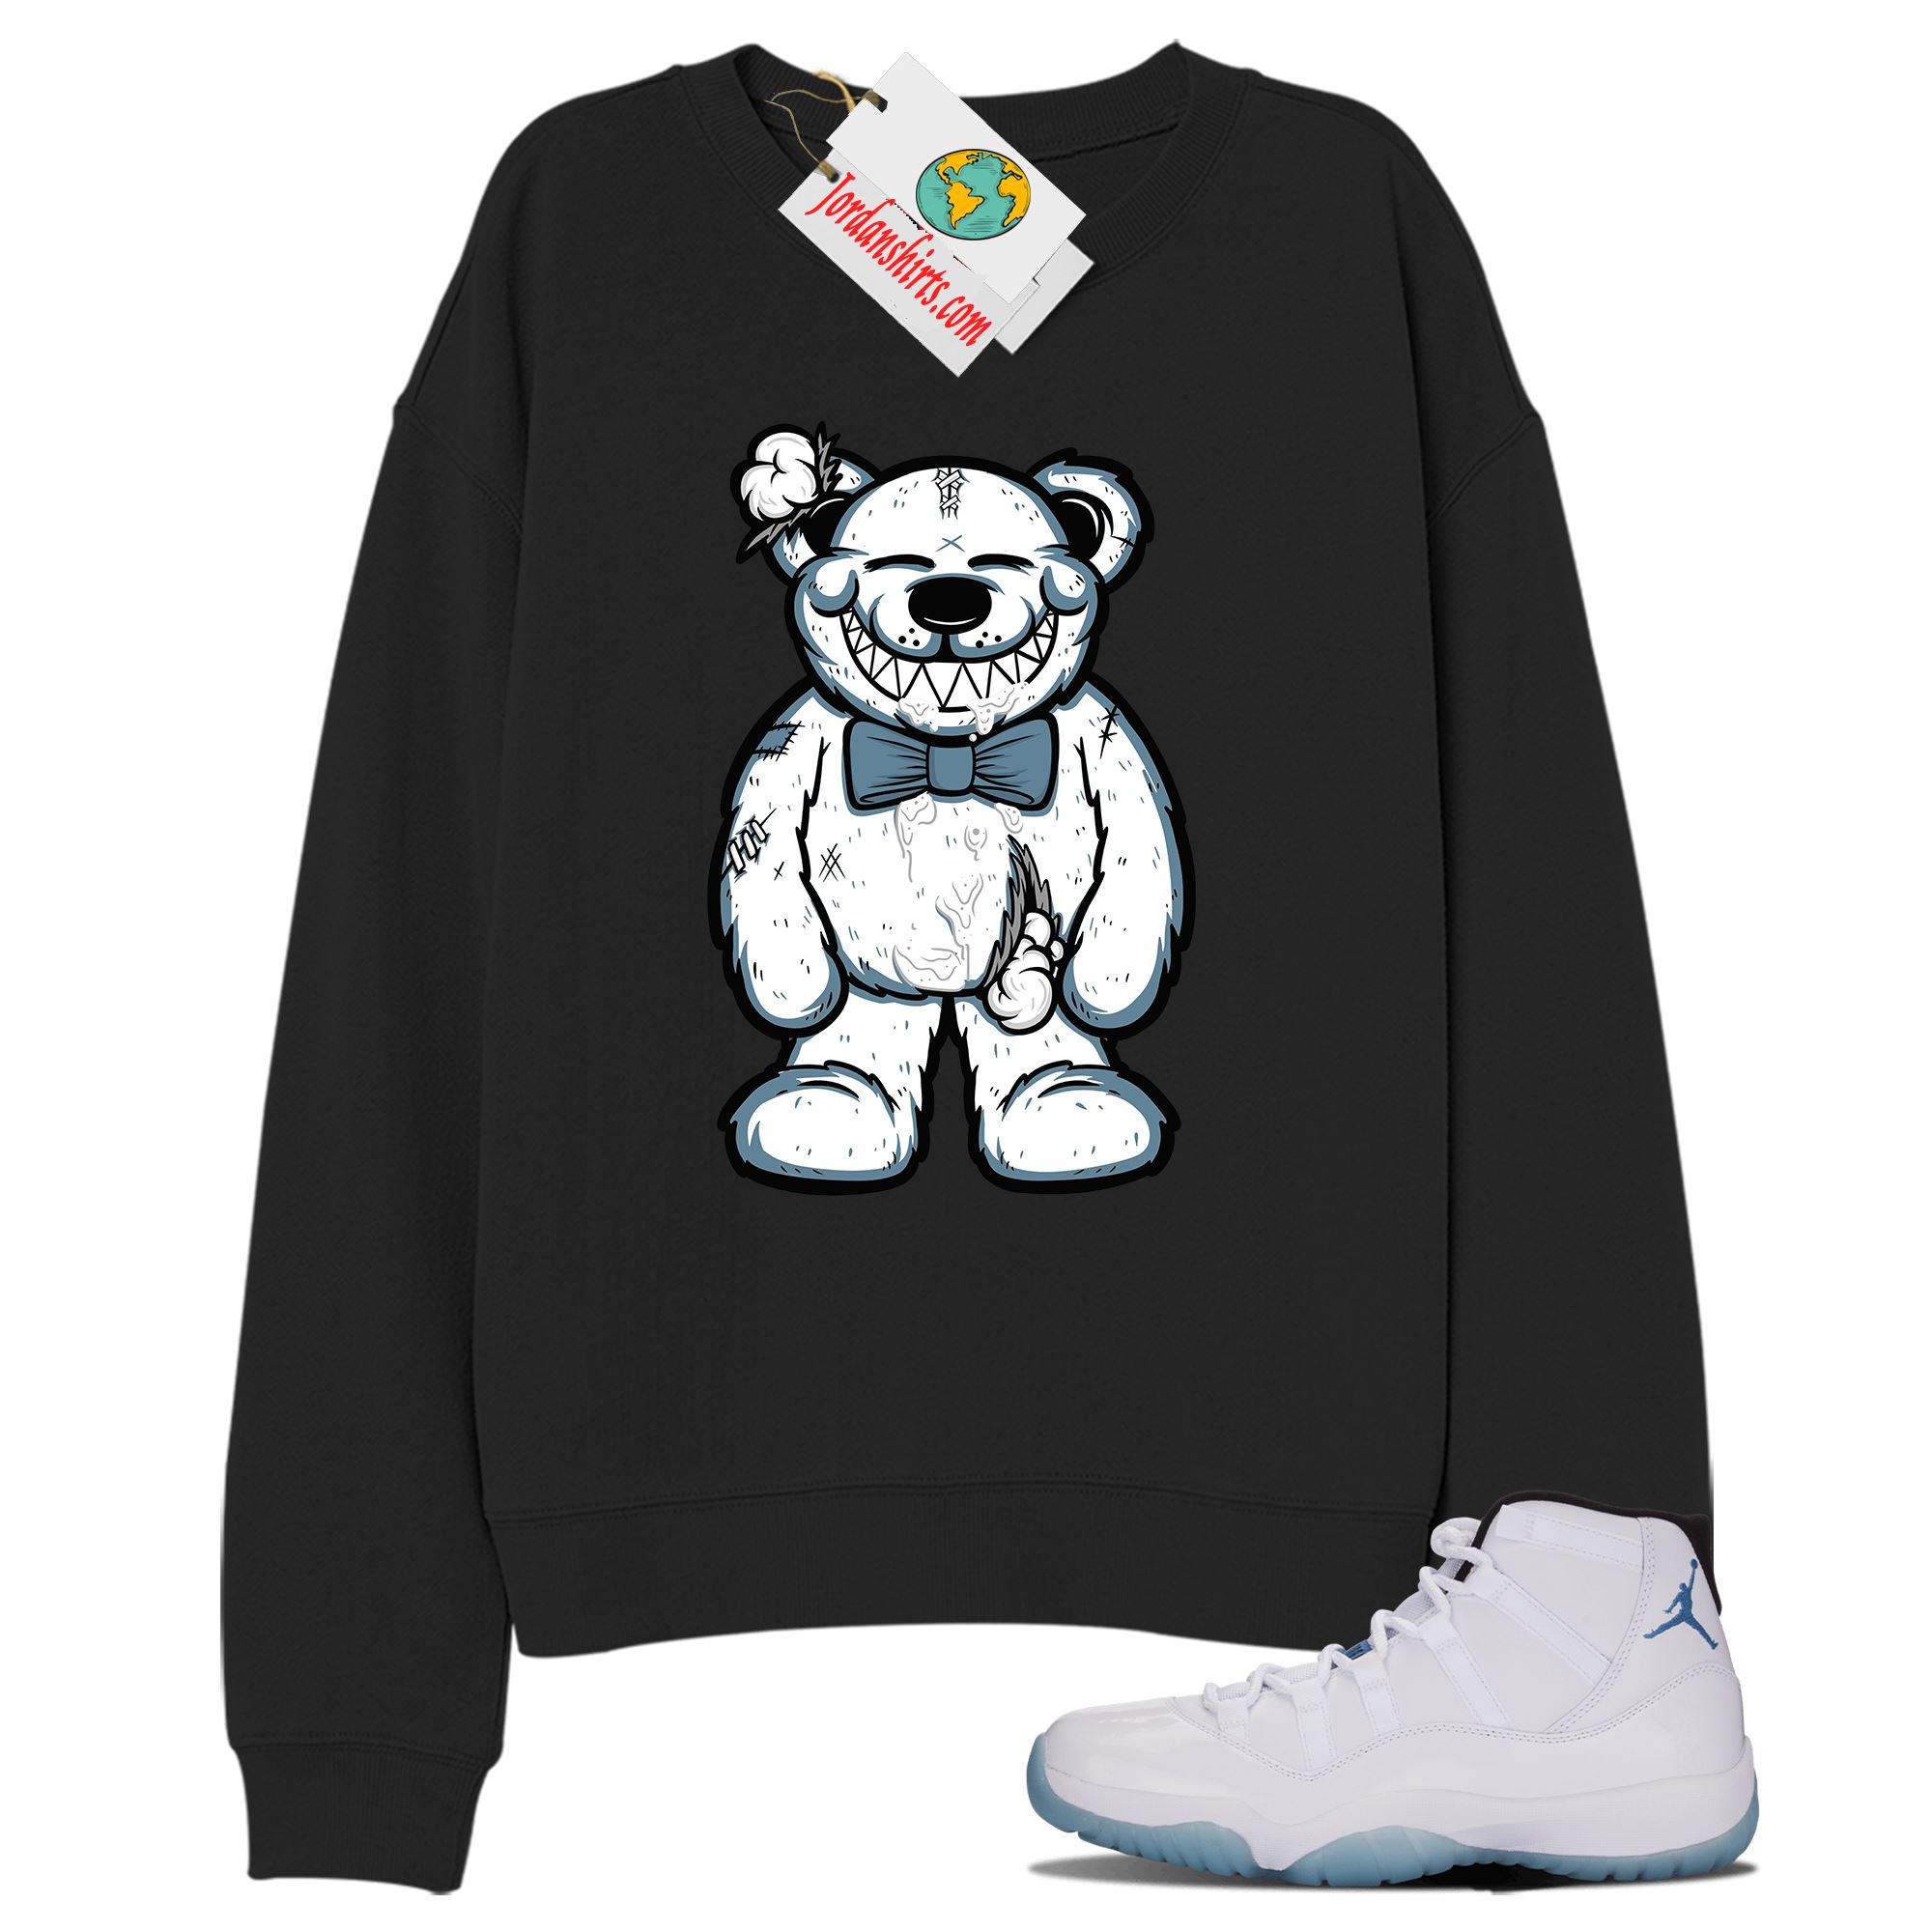 Jordan 11 Sweatshirt, Teddy Bear Smile Black Sweatshirt Air Jordan 11 Legend Blue 11s Size Up To 5xl